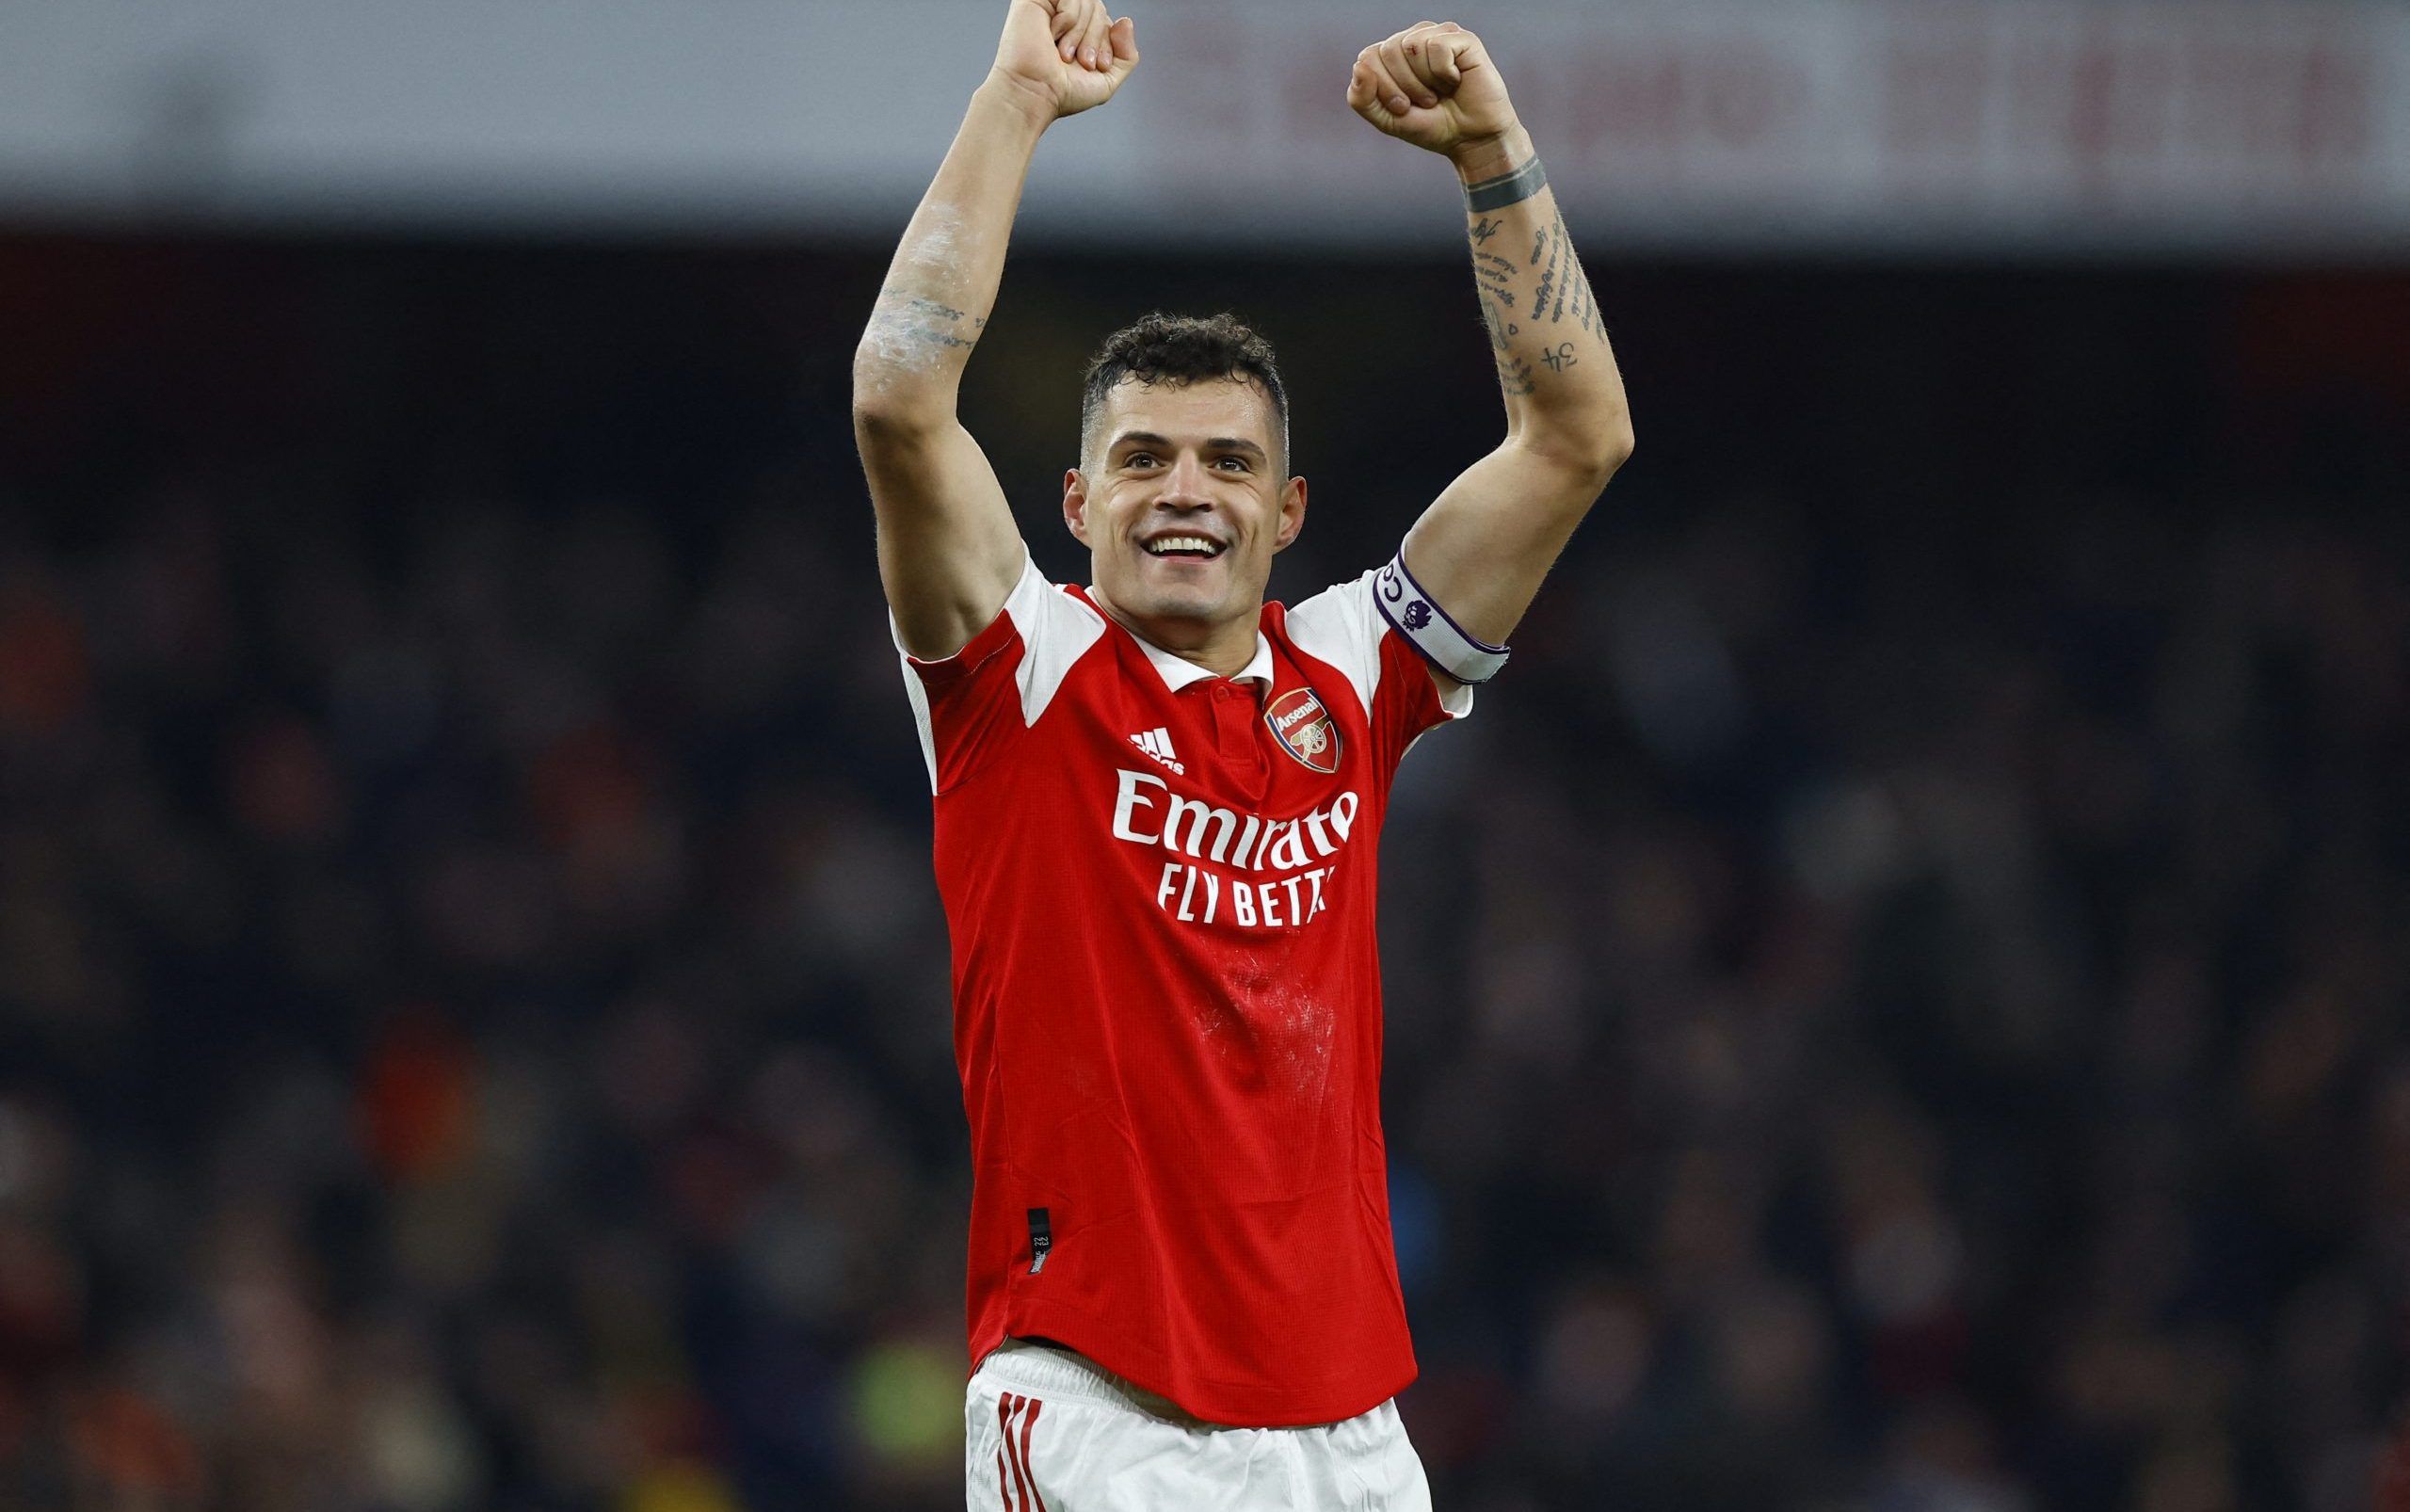 Arsenal's Granit Xhaka celebrates after the match